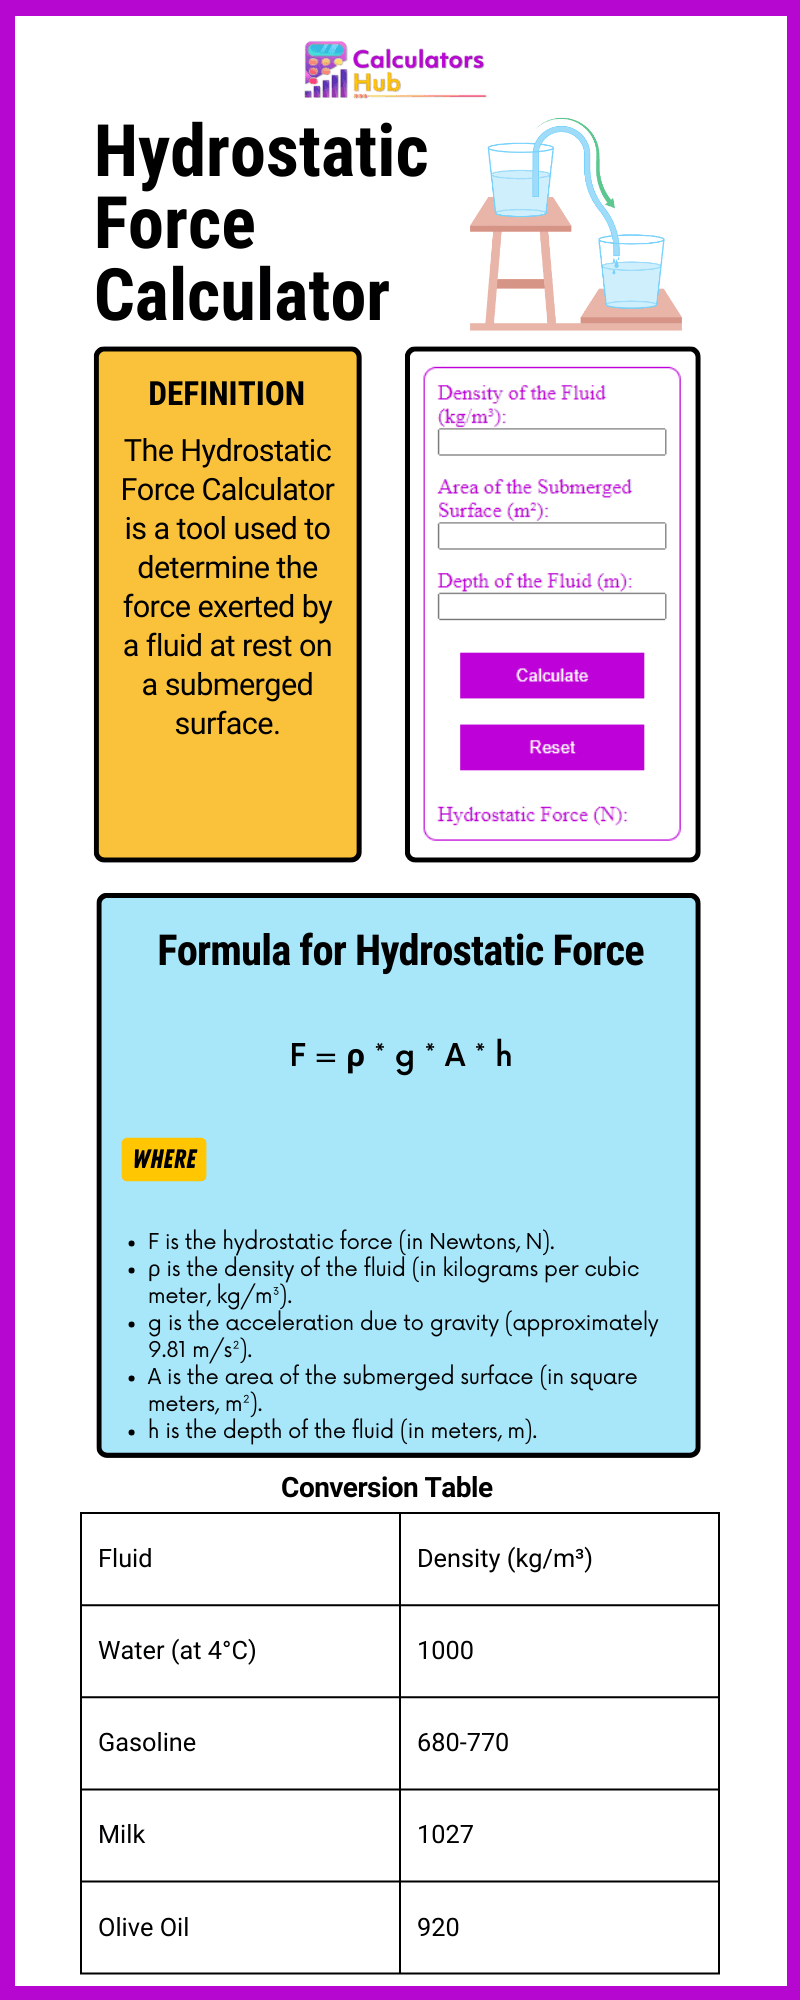 Hydrostatic Force Calculator